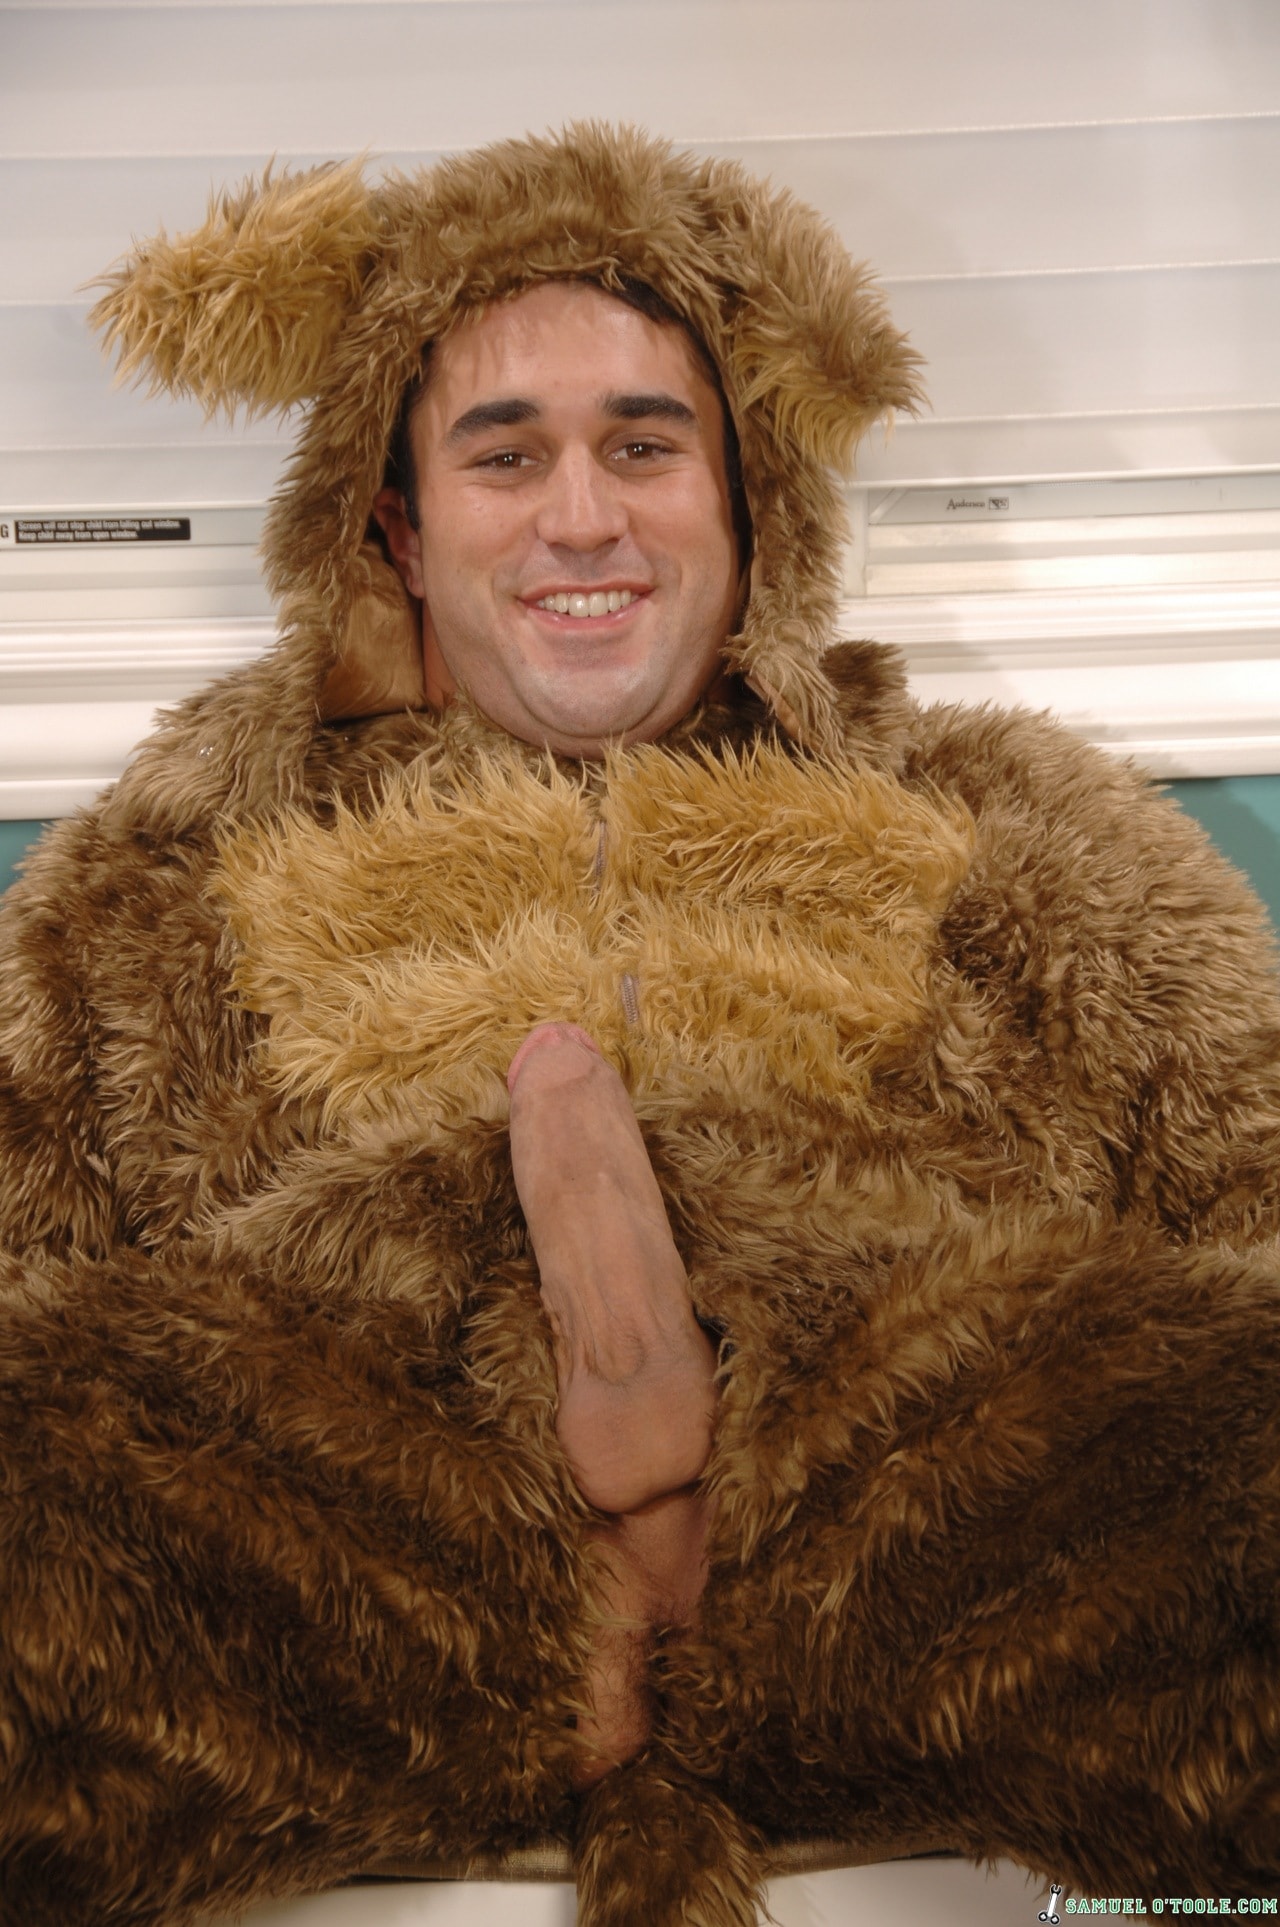 Next Door Studios 'Bearly Fur Real' starring Samuel O'Toole (Photo 8)